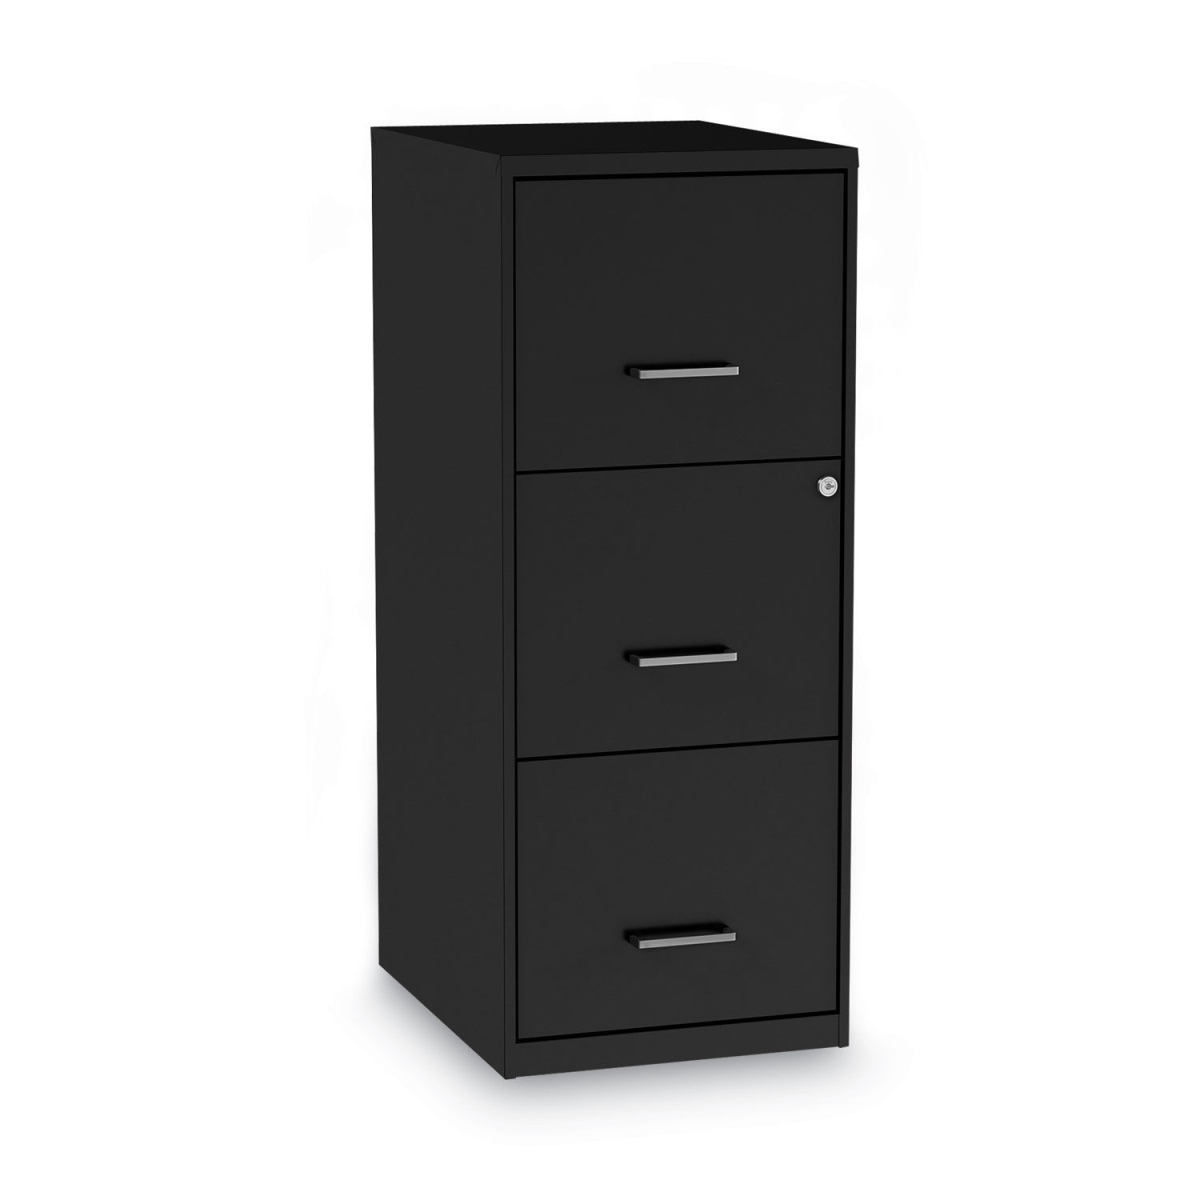 UPC 042167000110 product image for Alera 2806770 Letter Size 3 Drawers Soho Vertical File Cabinet, Black | upcitemdb.com